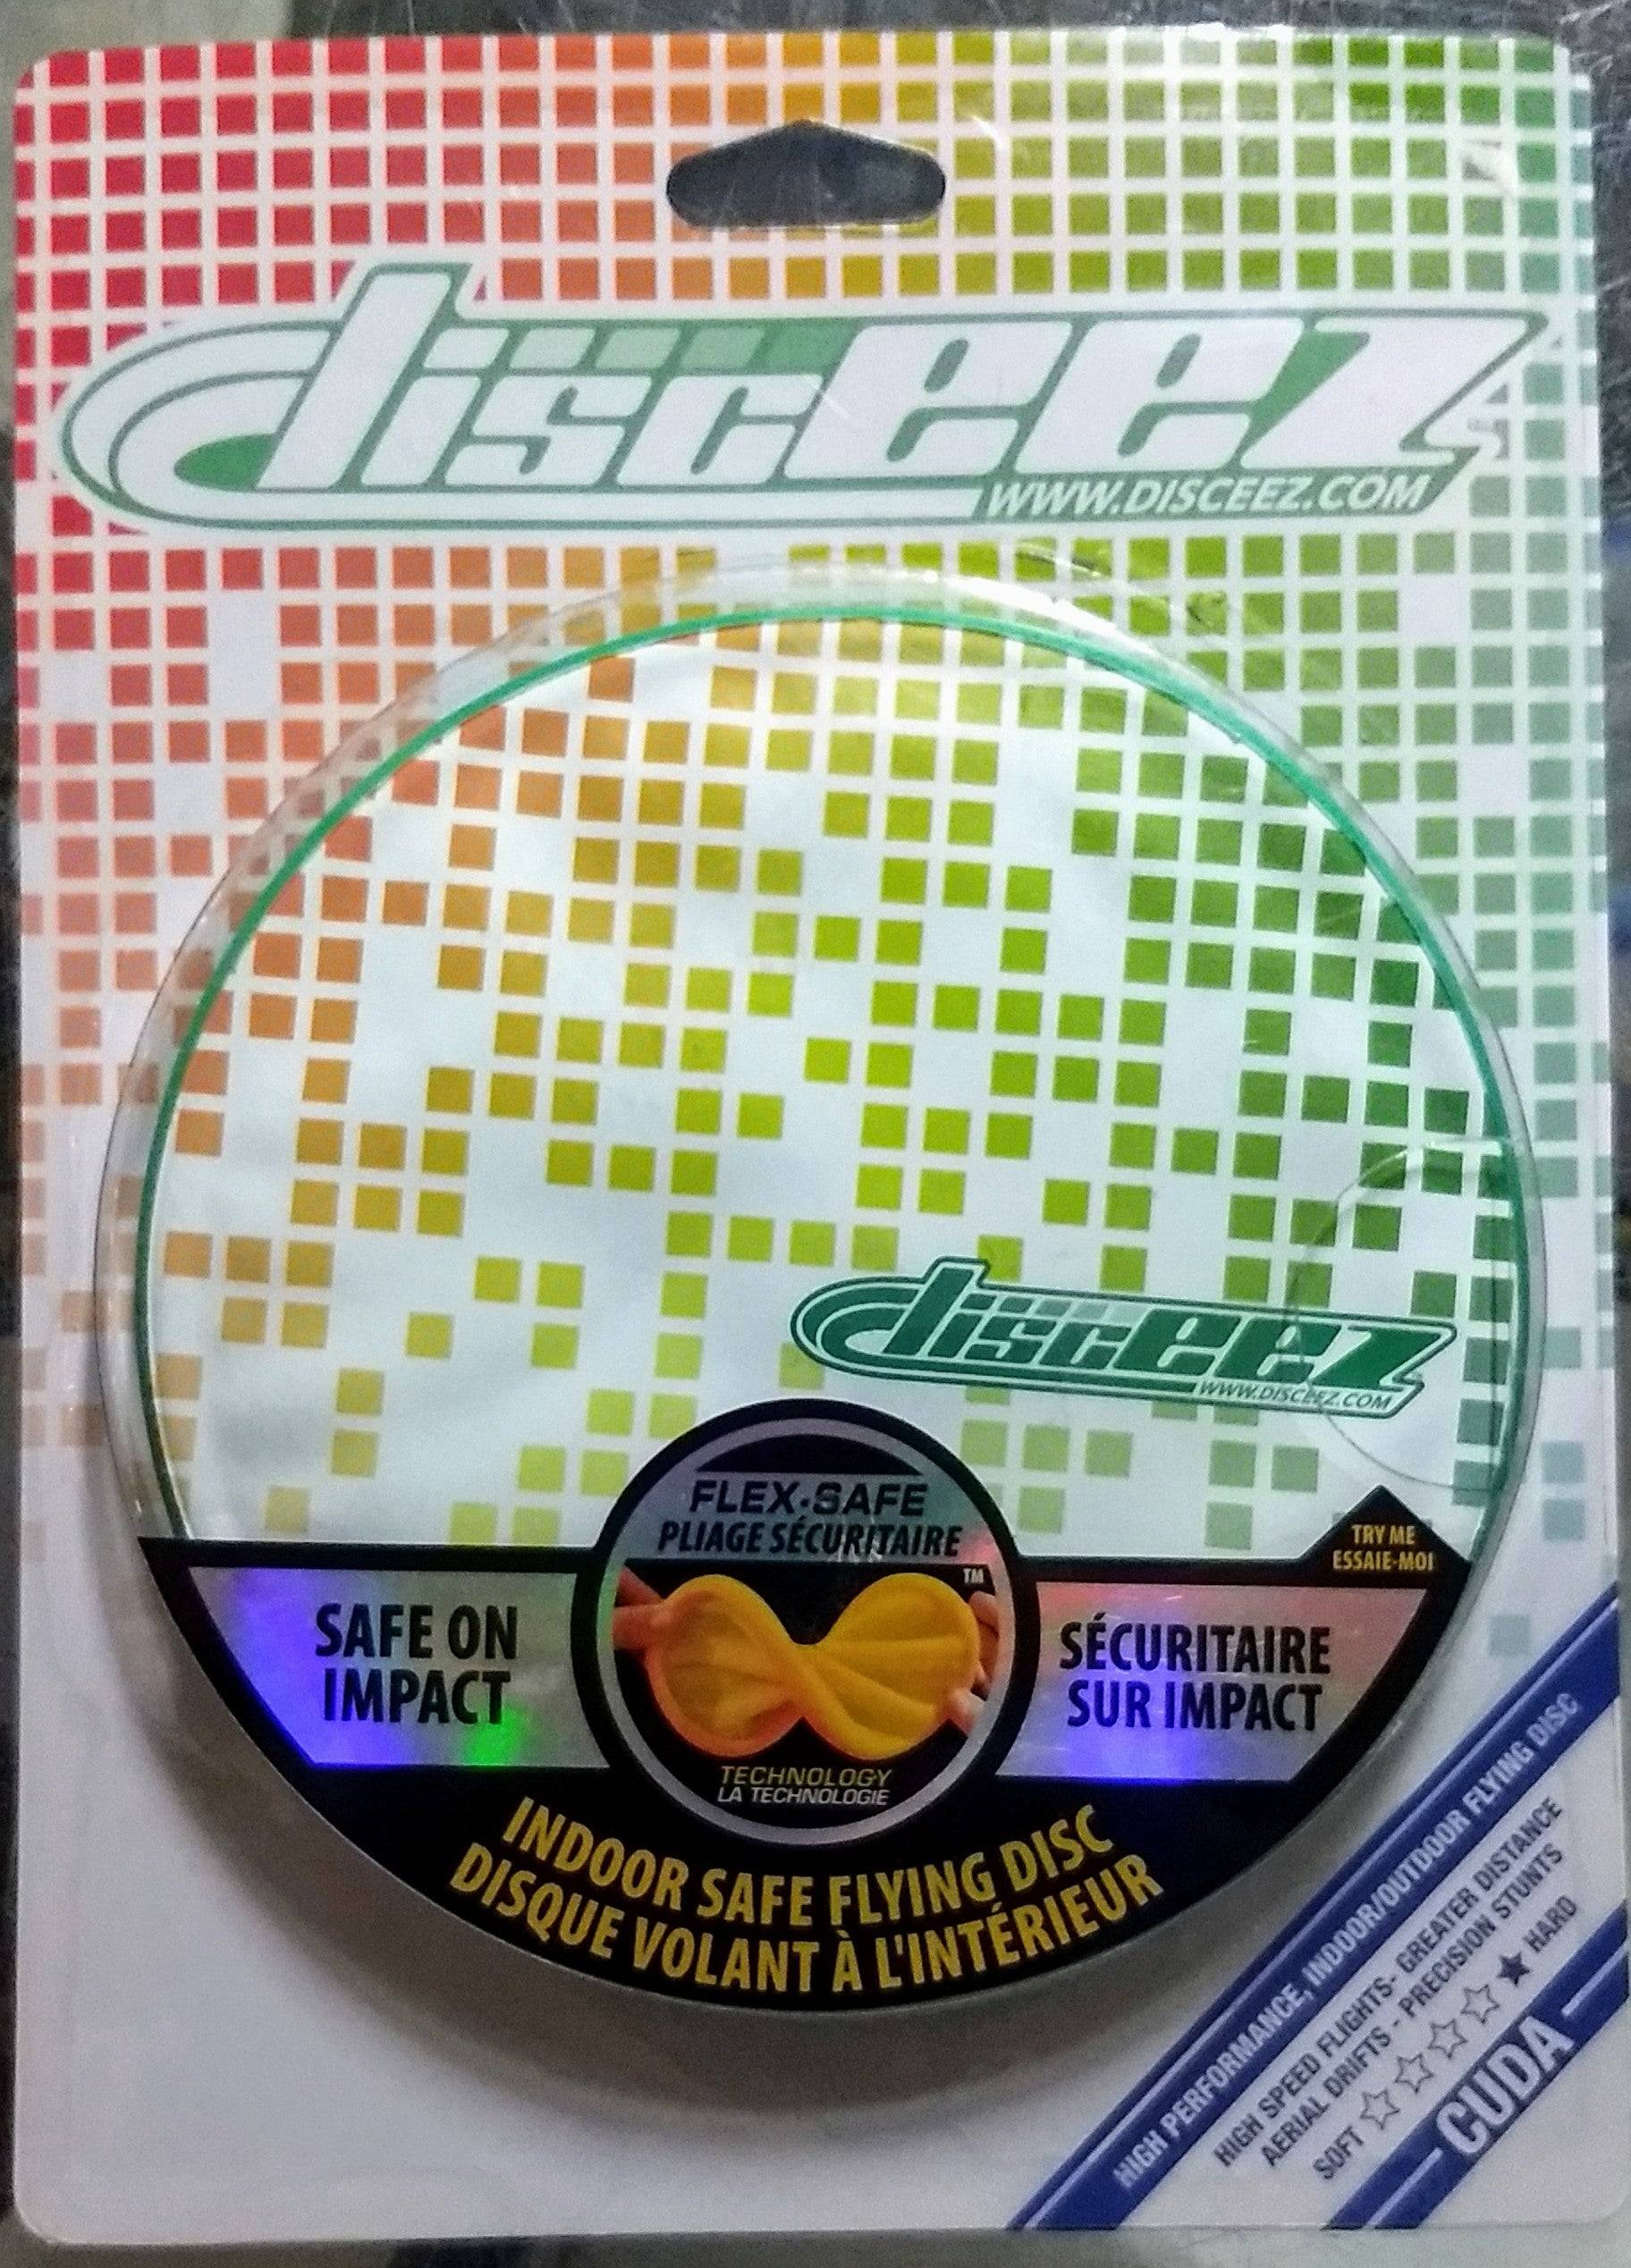 Disceez Indoor Flying Disc Amazing Flight, Safe on Impact Flex-Safe Technology - jeux video game-x